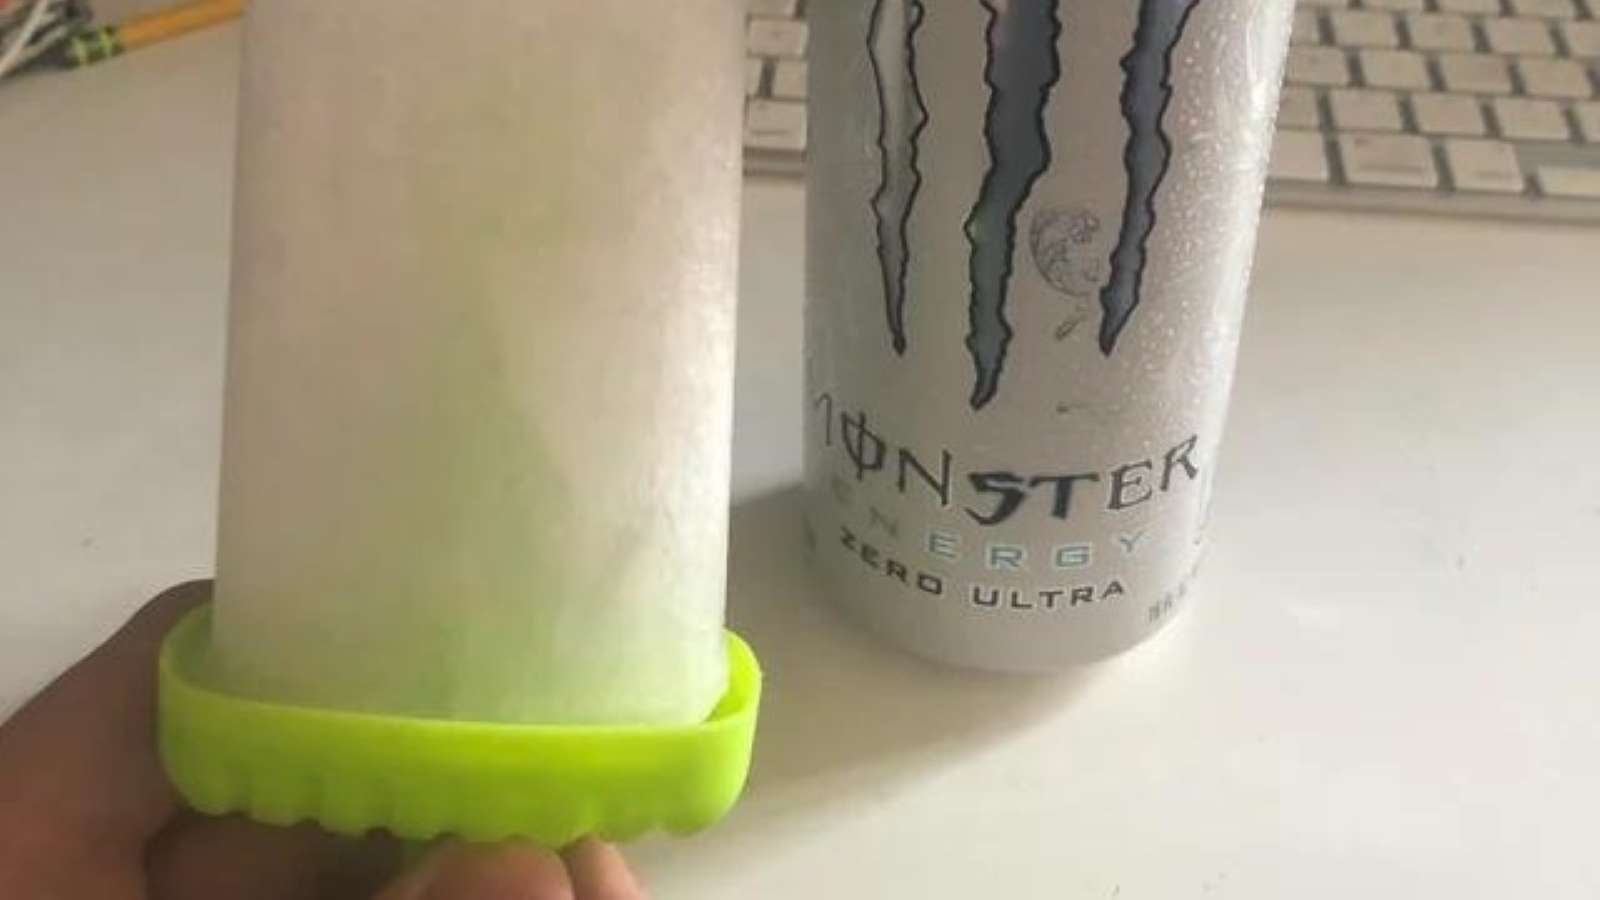 reddit user banned energy drink popsicle